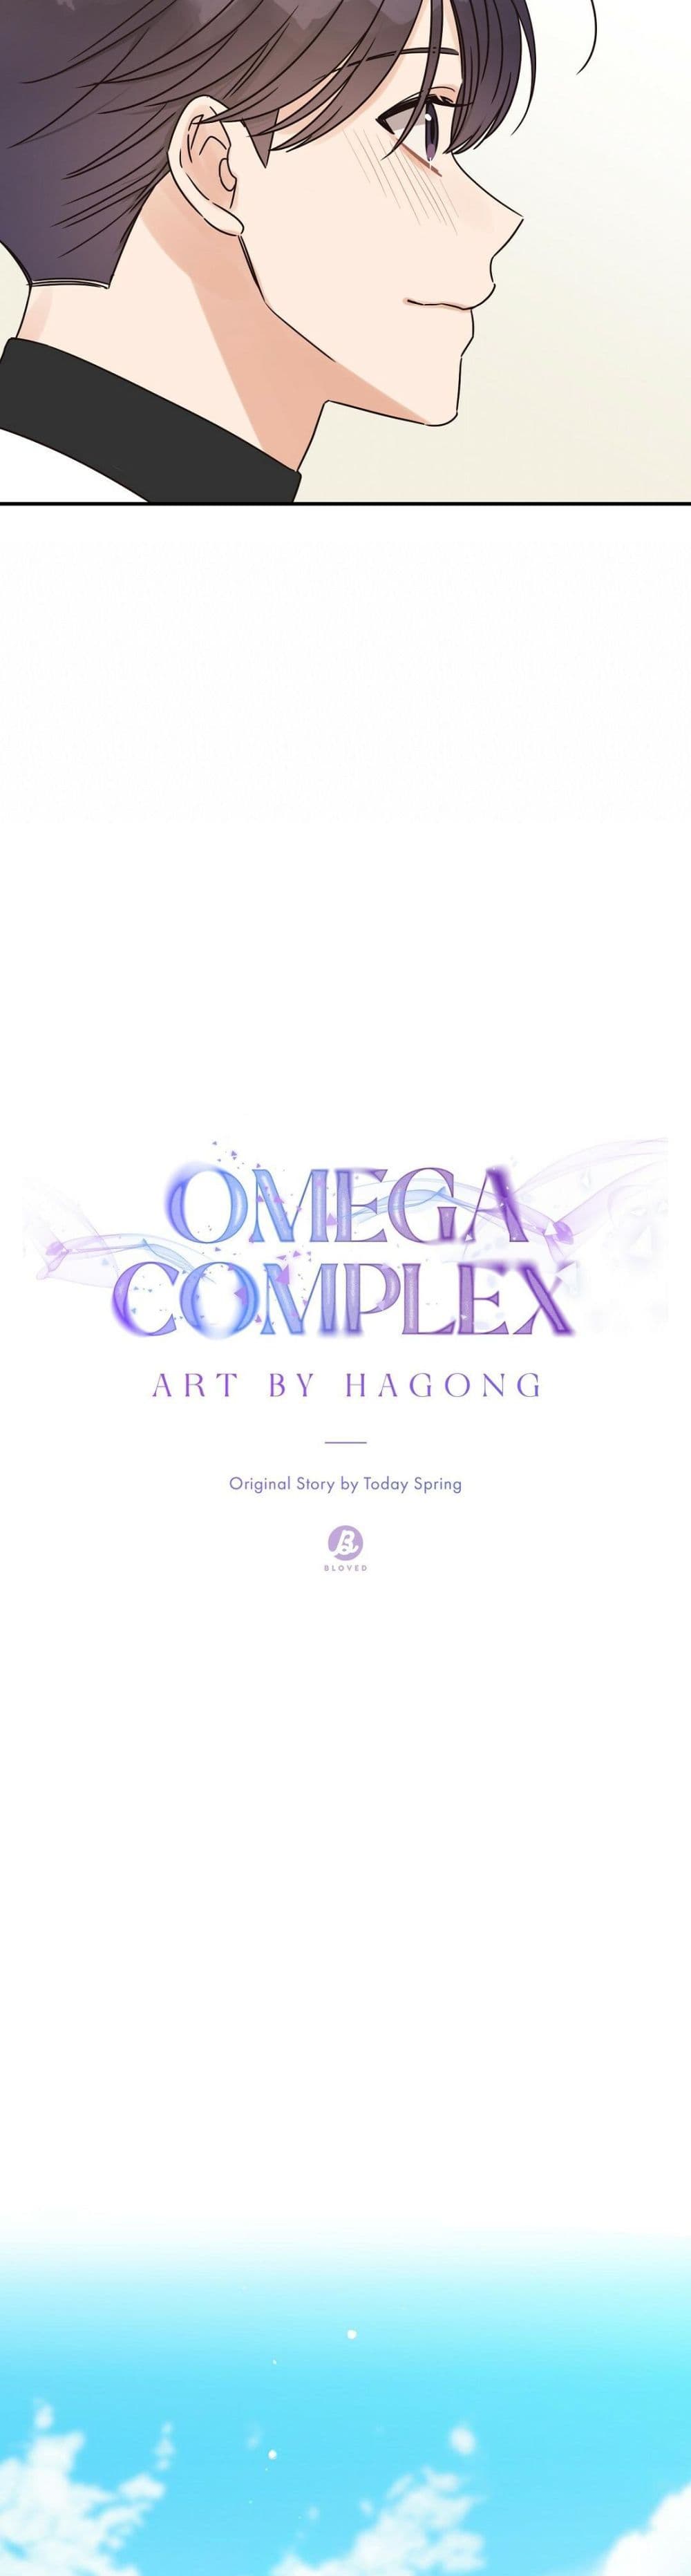 Omega Complex22 15